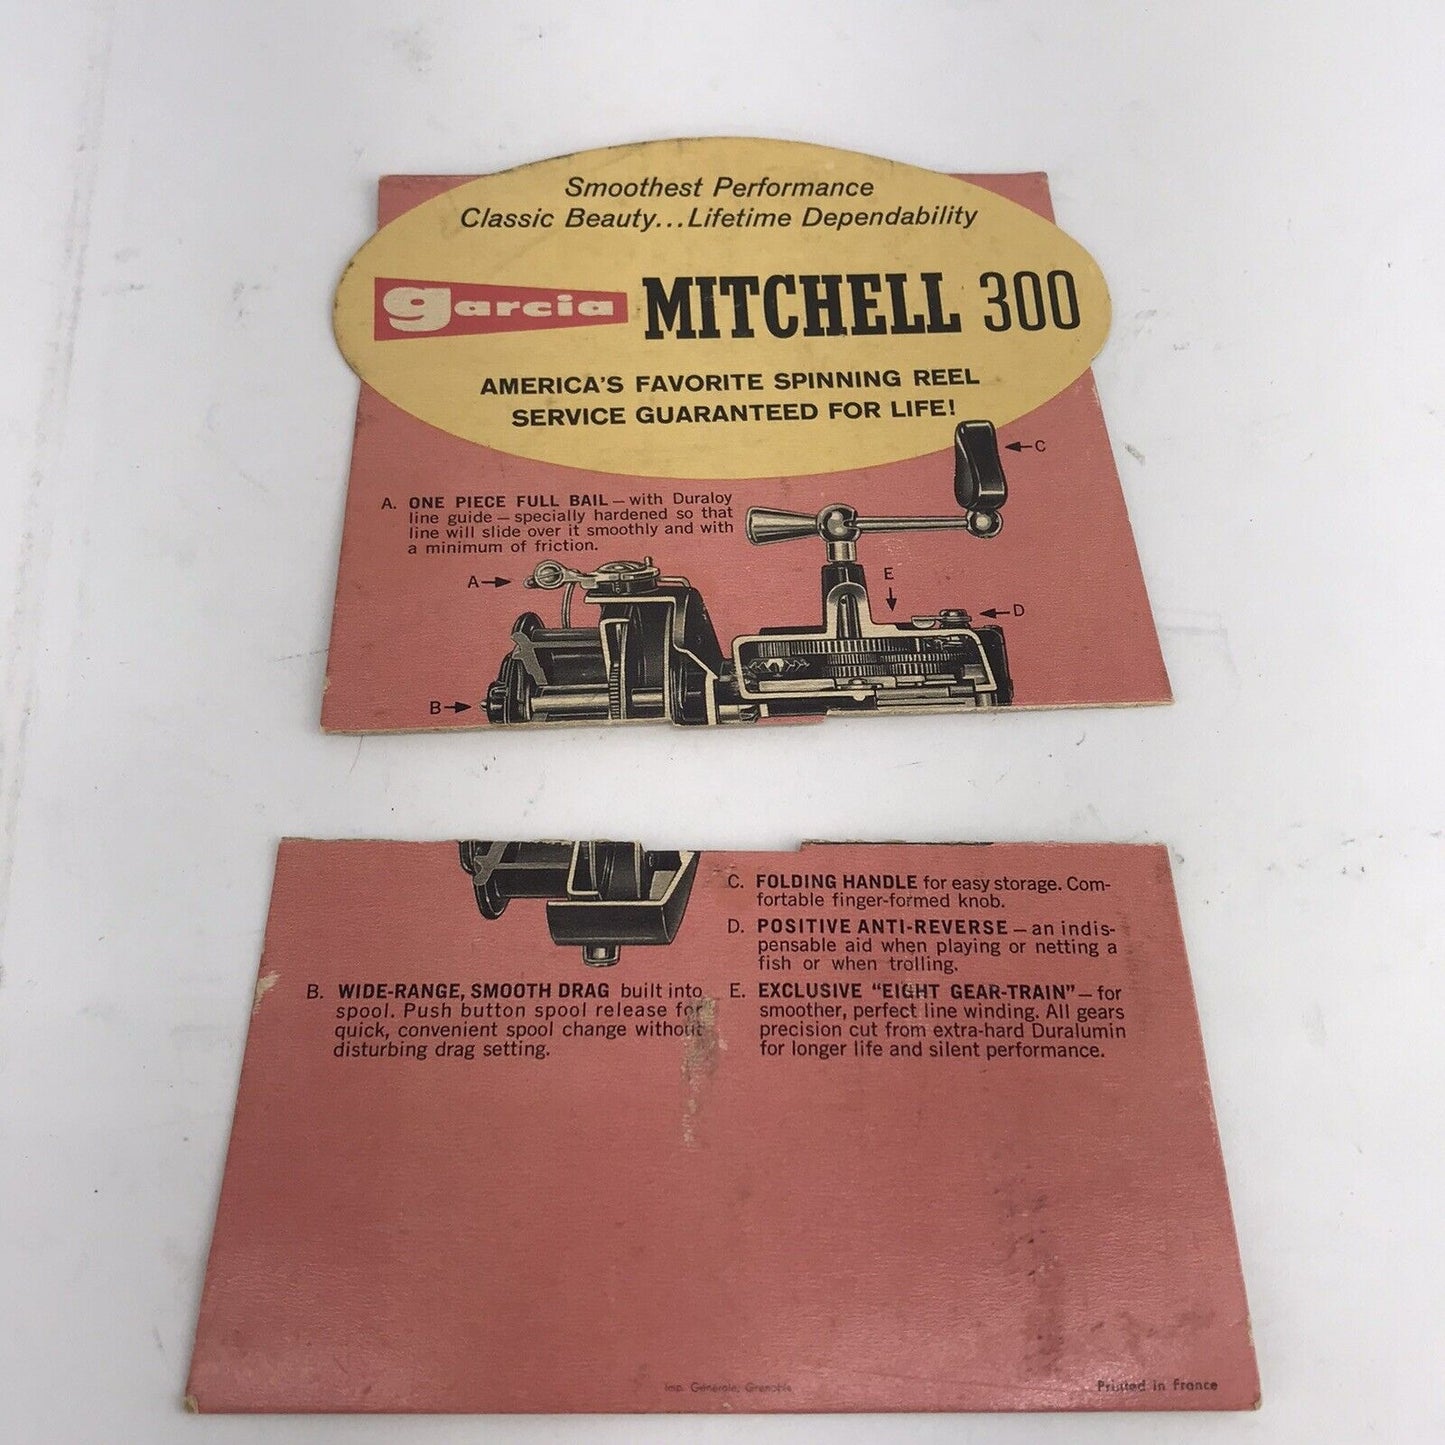 Vintage Garcia Mitchell 300 Reel Cardboard Advertisement Advertising Piece